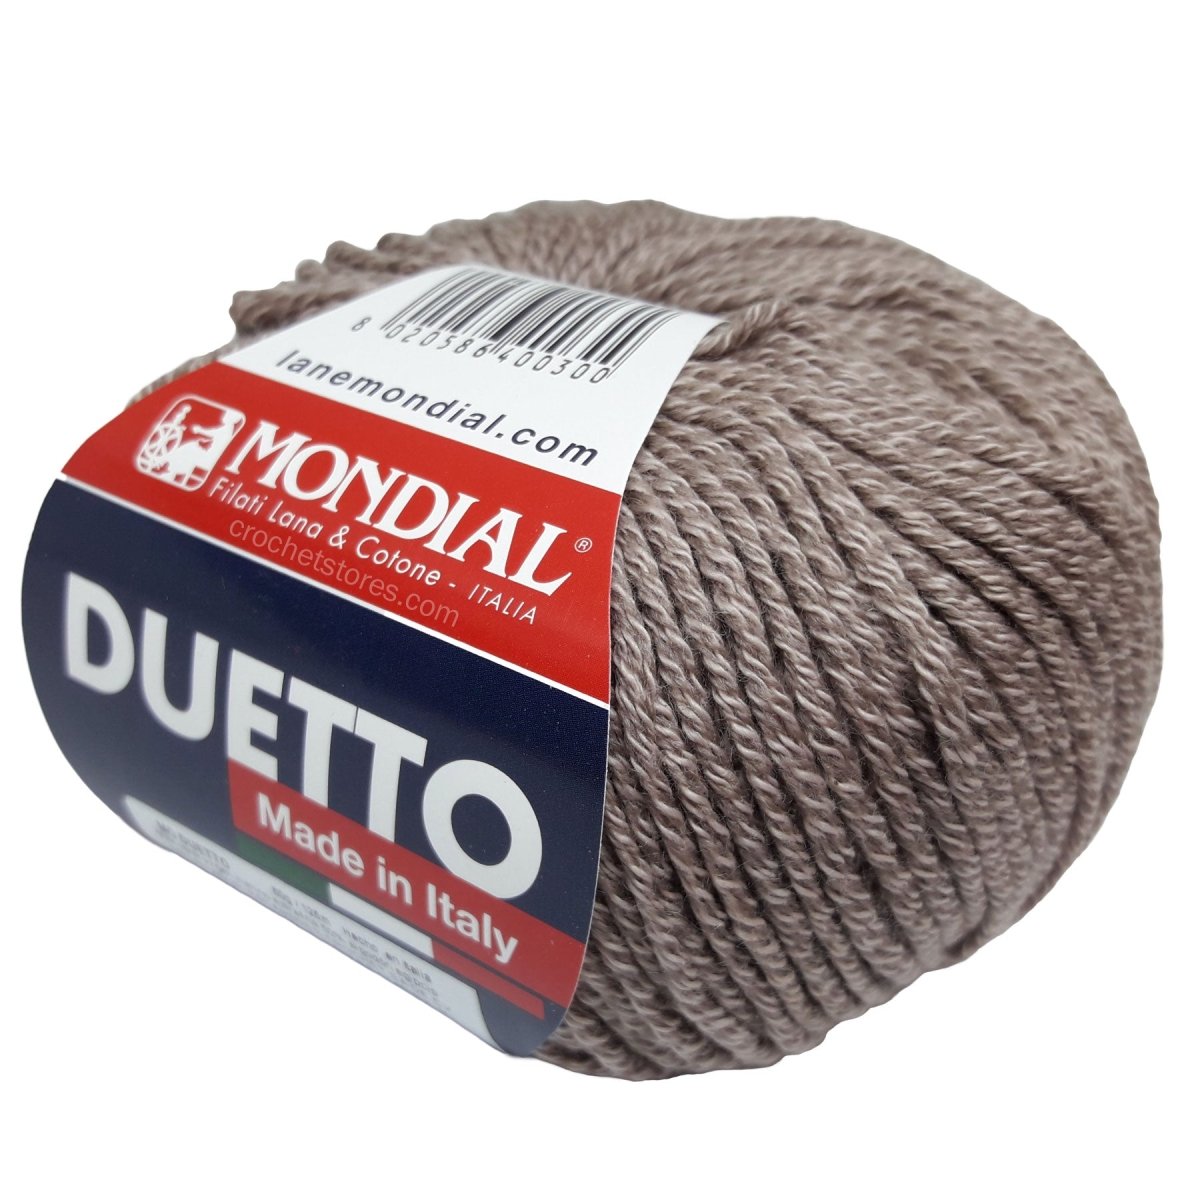 DUETTO - Crochetstores1175-7188020586400300